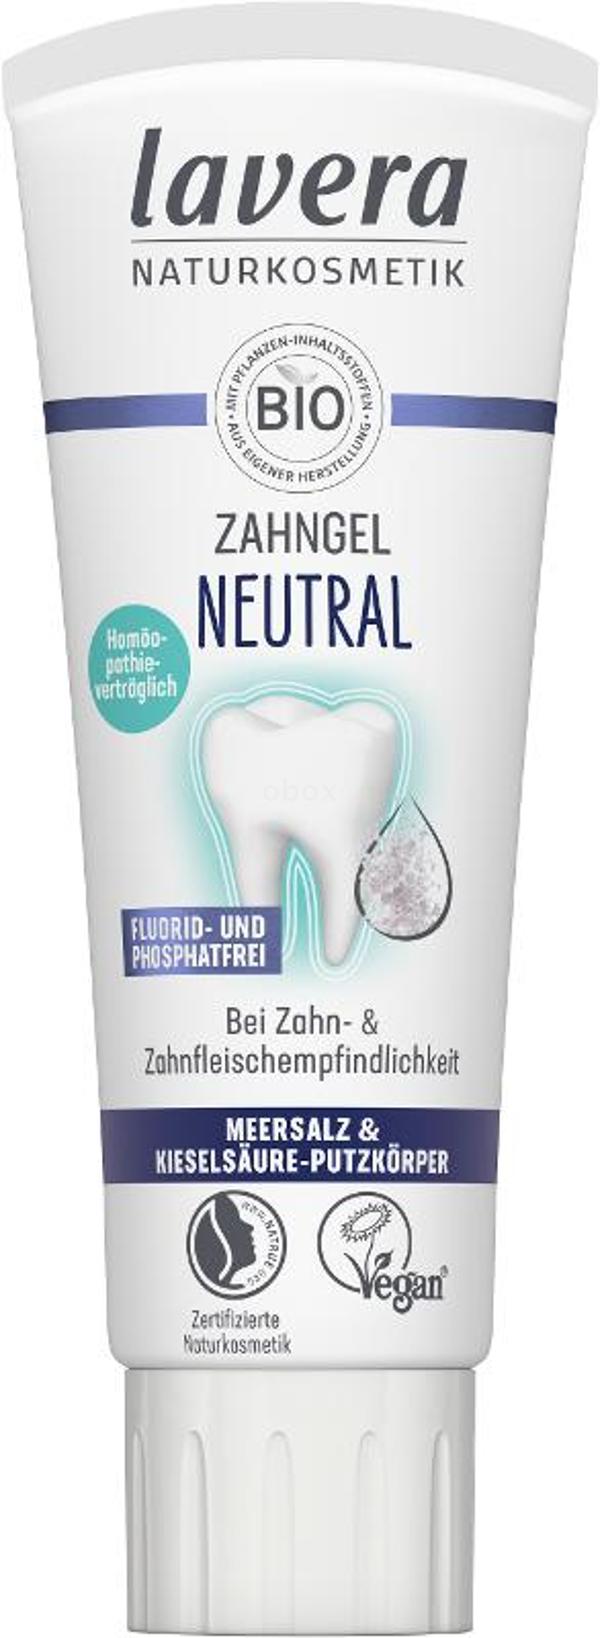 Produktfoto zu Zahngel Neutral